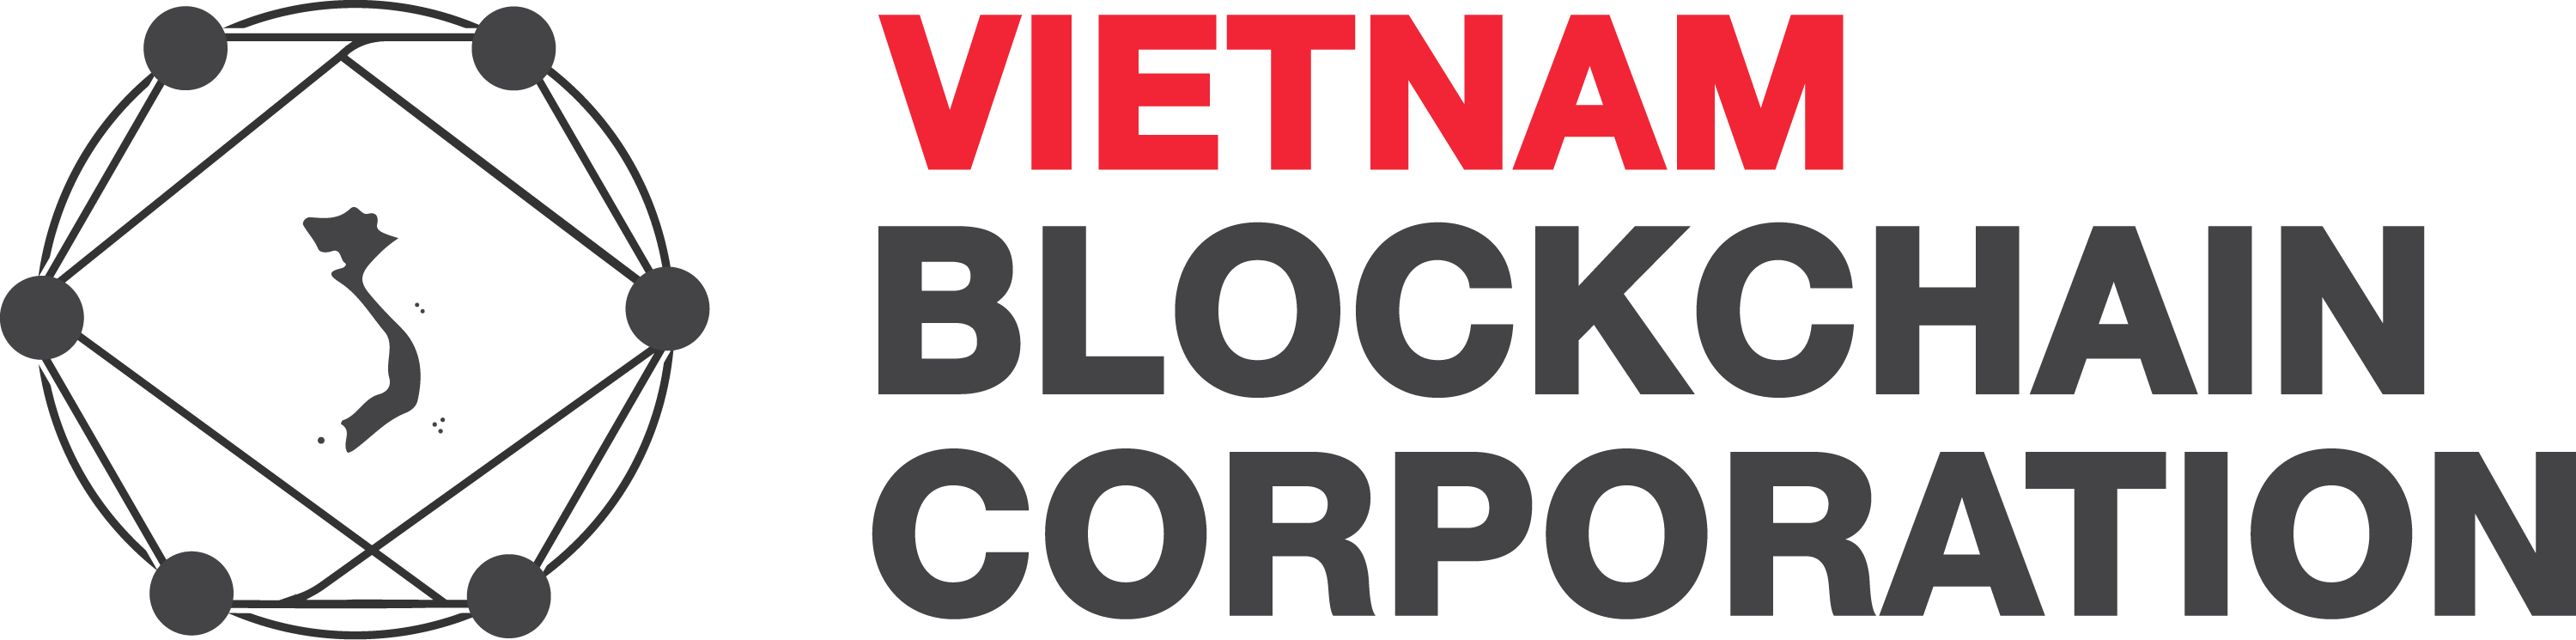 Vietnam Blockchain Corporation